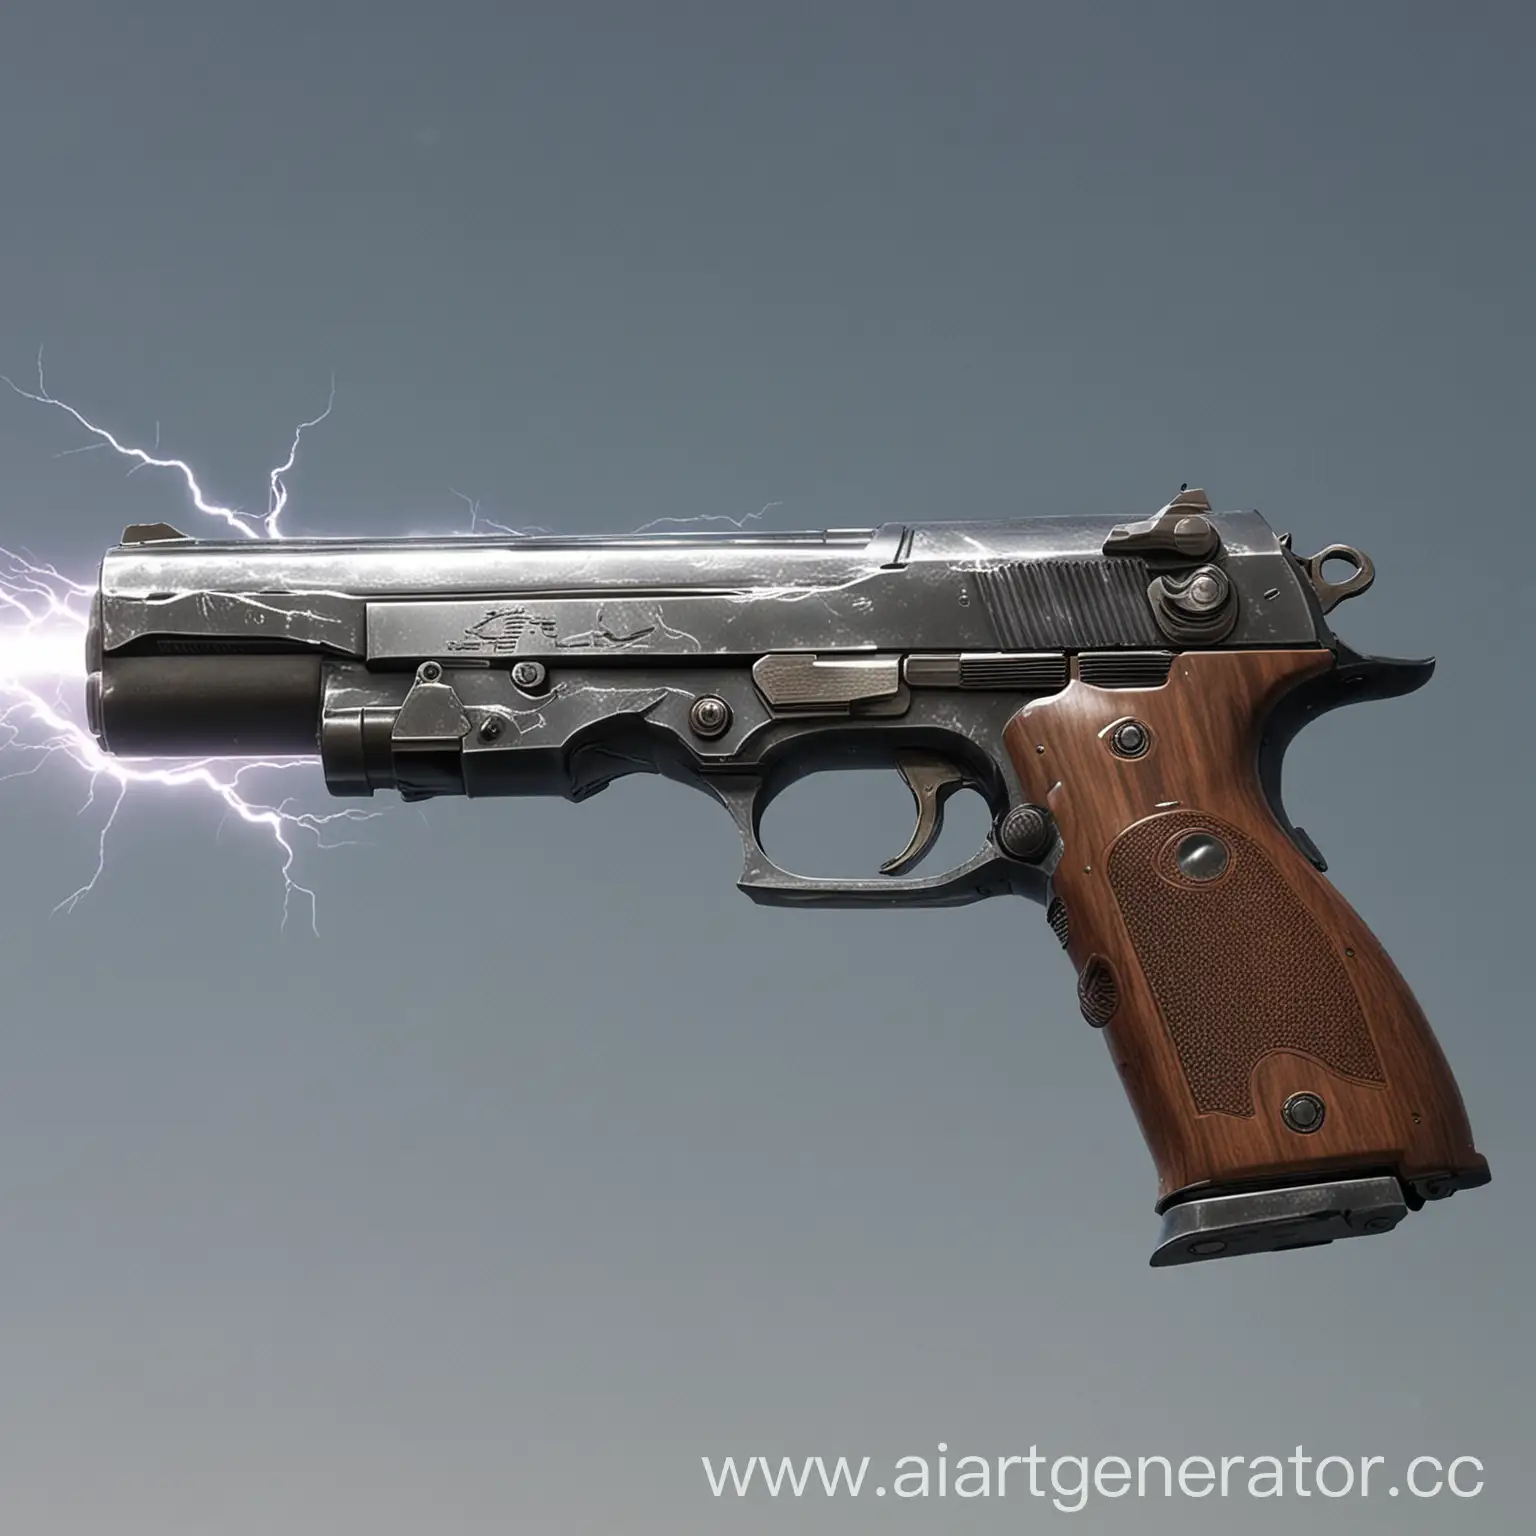 Electrifying-Lightning-Pistol-in-Action